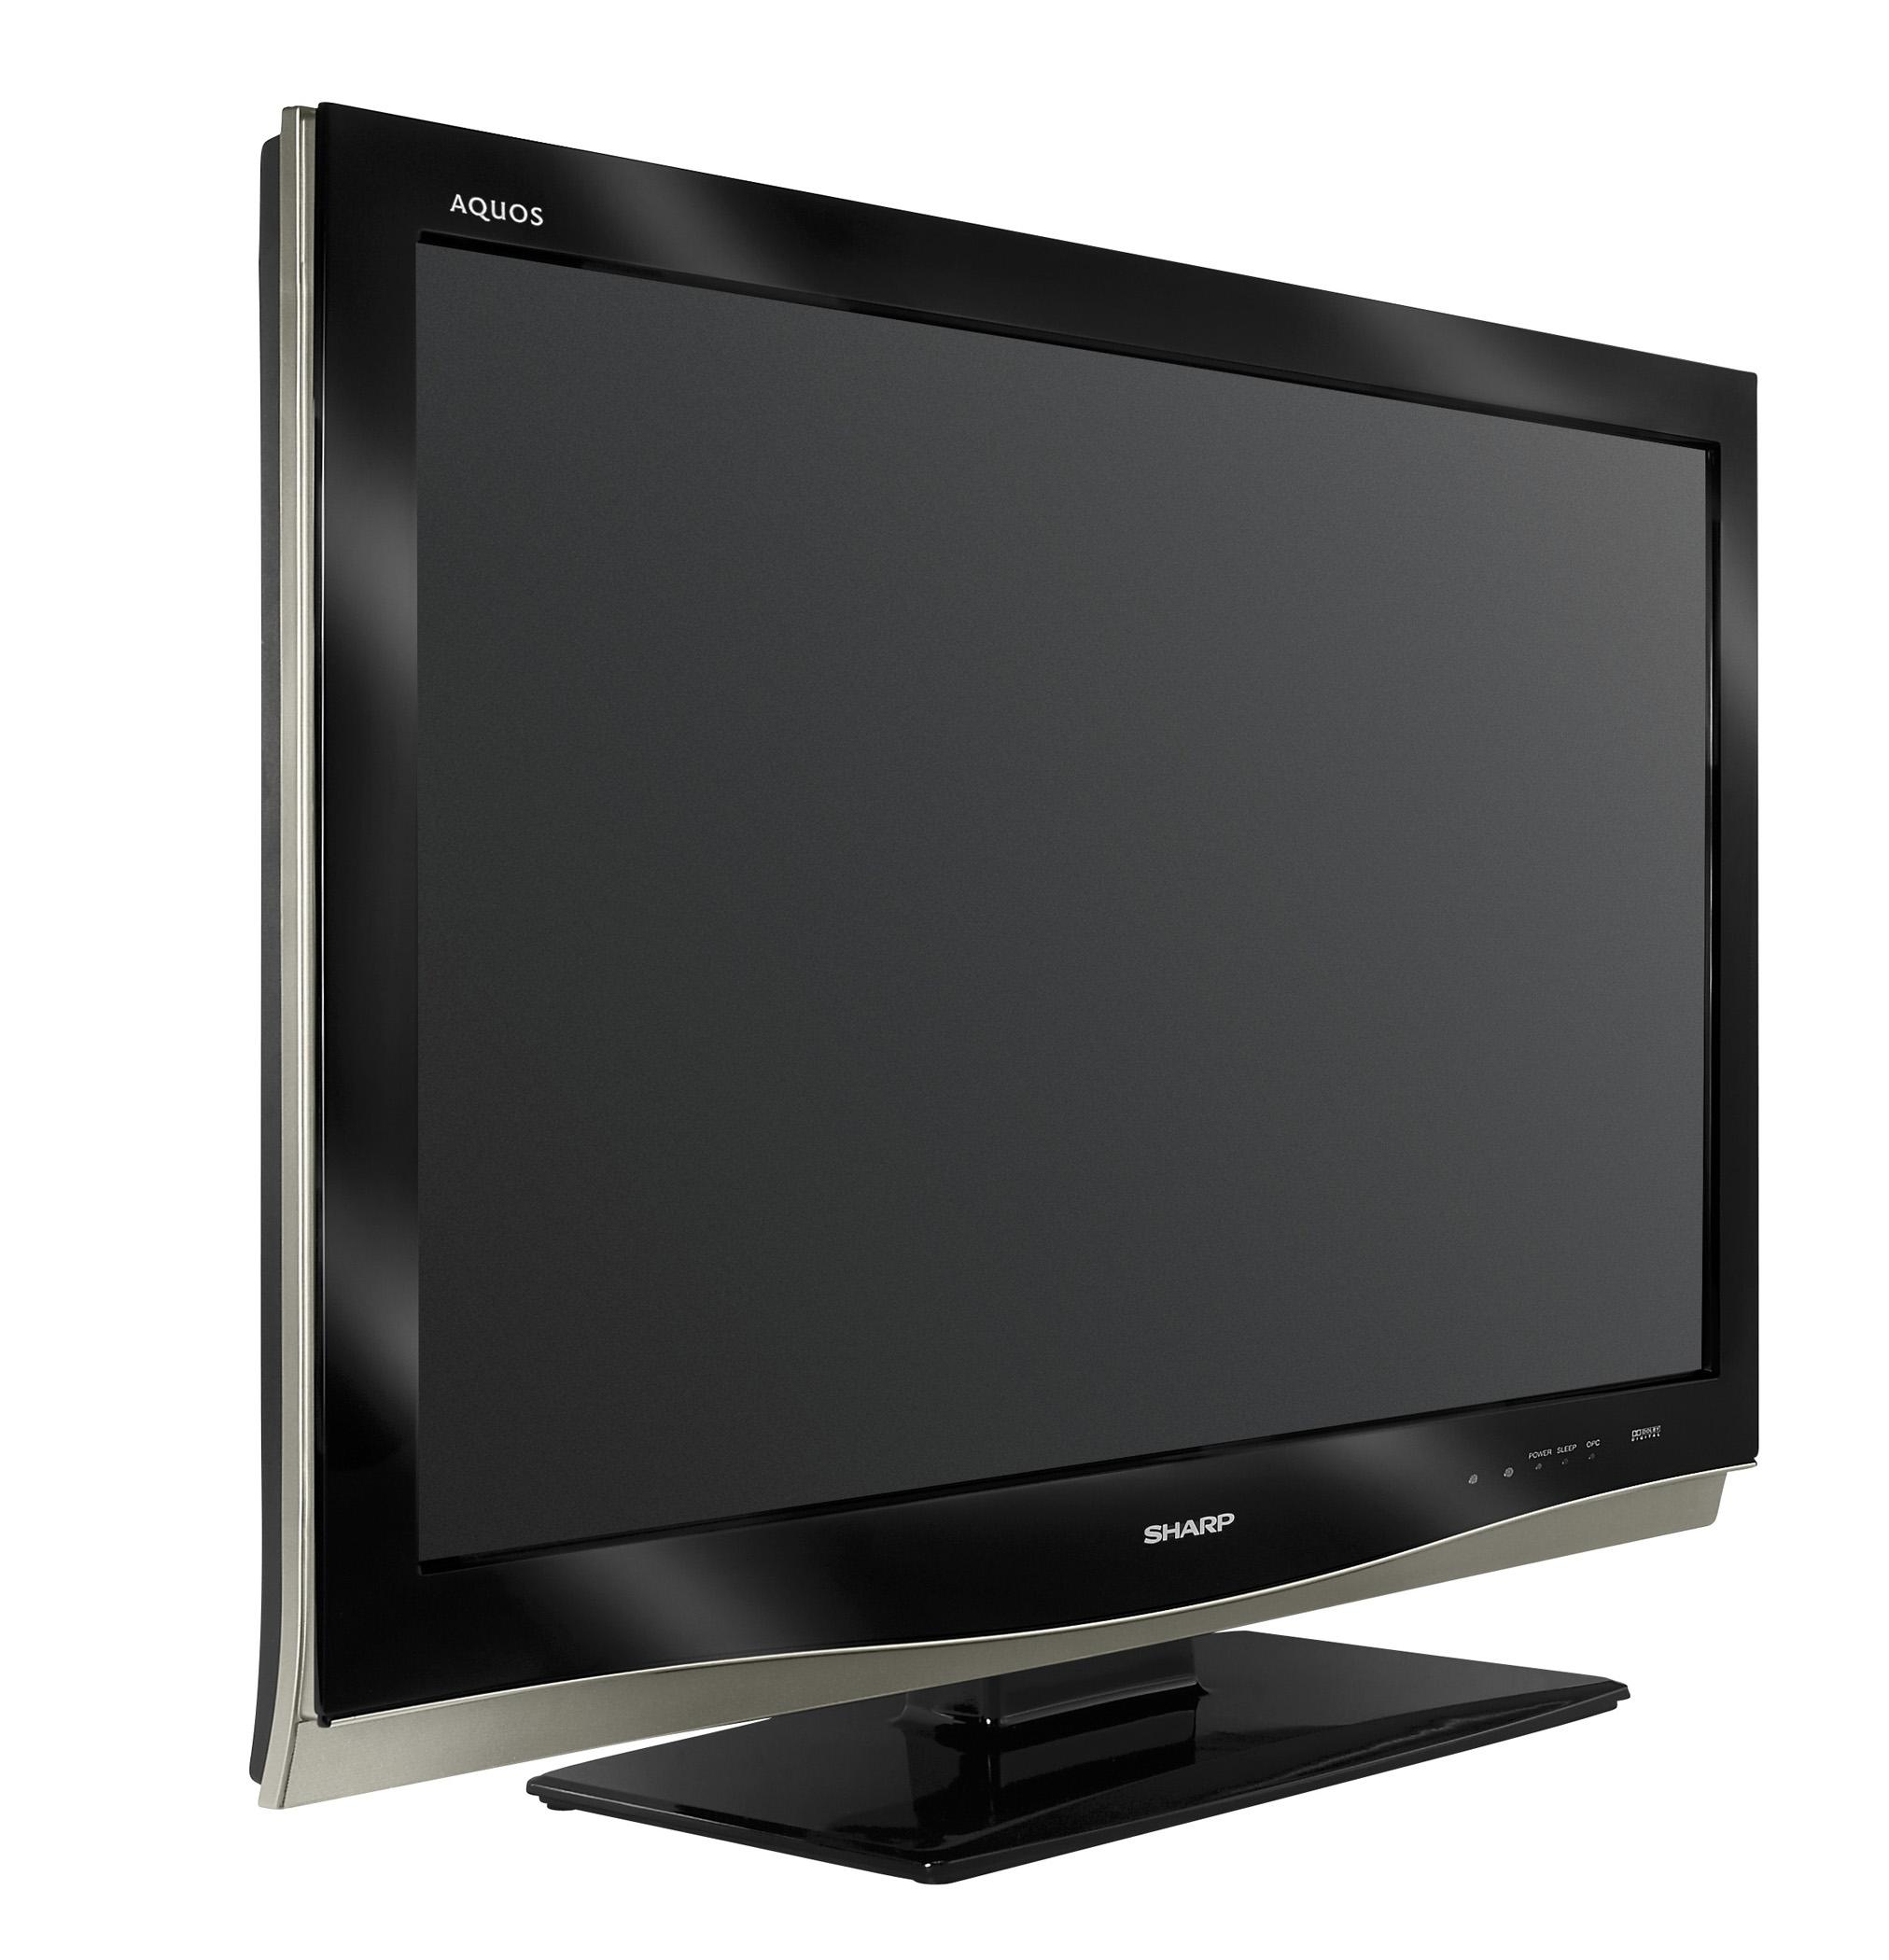 Sharp Aquos LC32D62U 32-in. 1080p LCD HDTV - 10555234 - Overstock.com